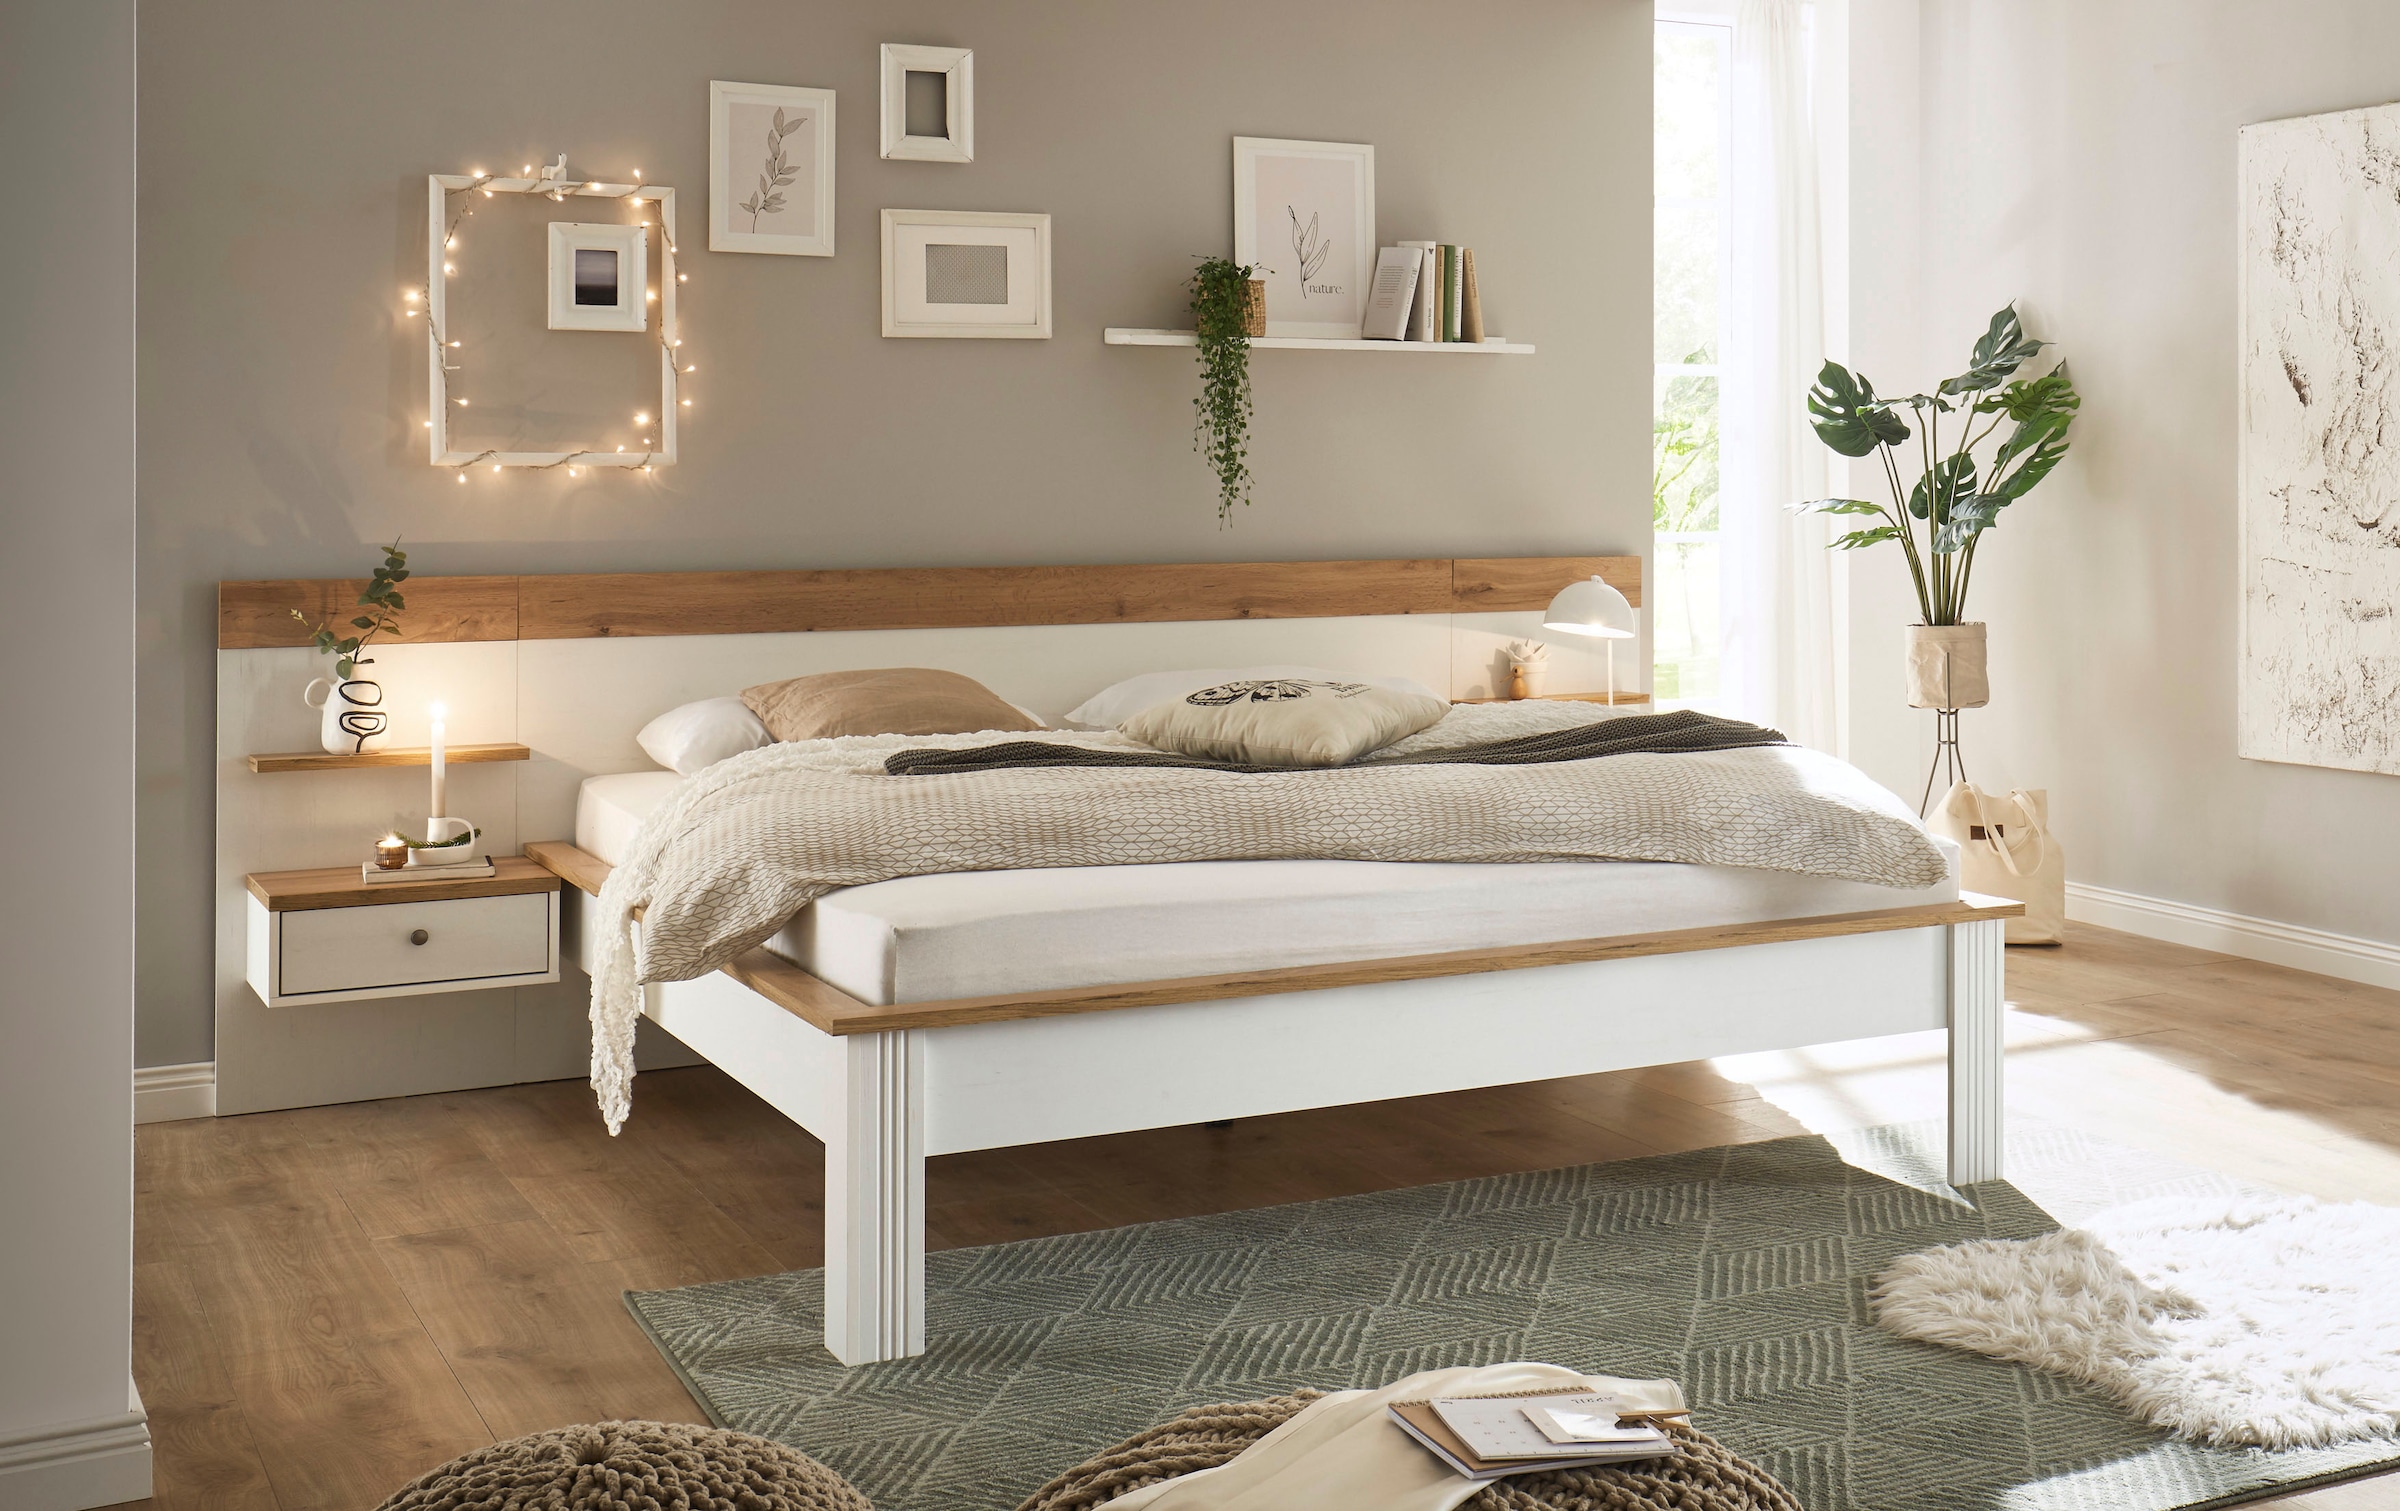 Home affaire Schlafzimmer-Set »Westminster«, Bett Liegefläche 180/200cm und 2 Wandpaneele